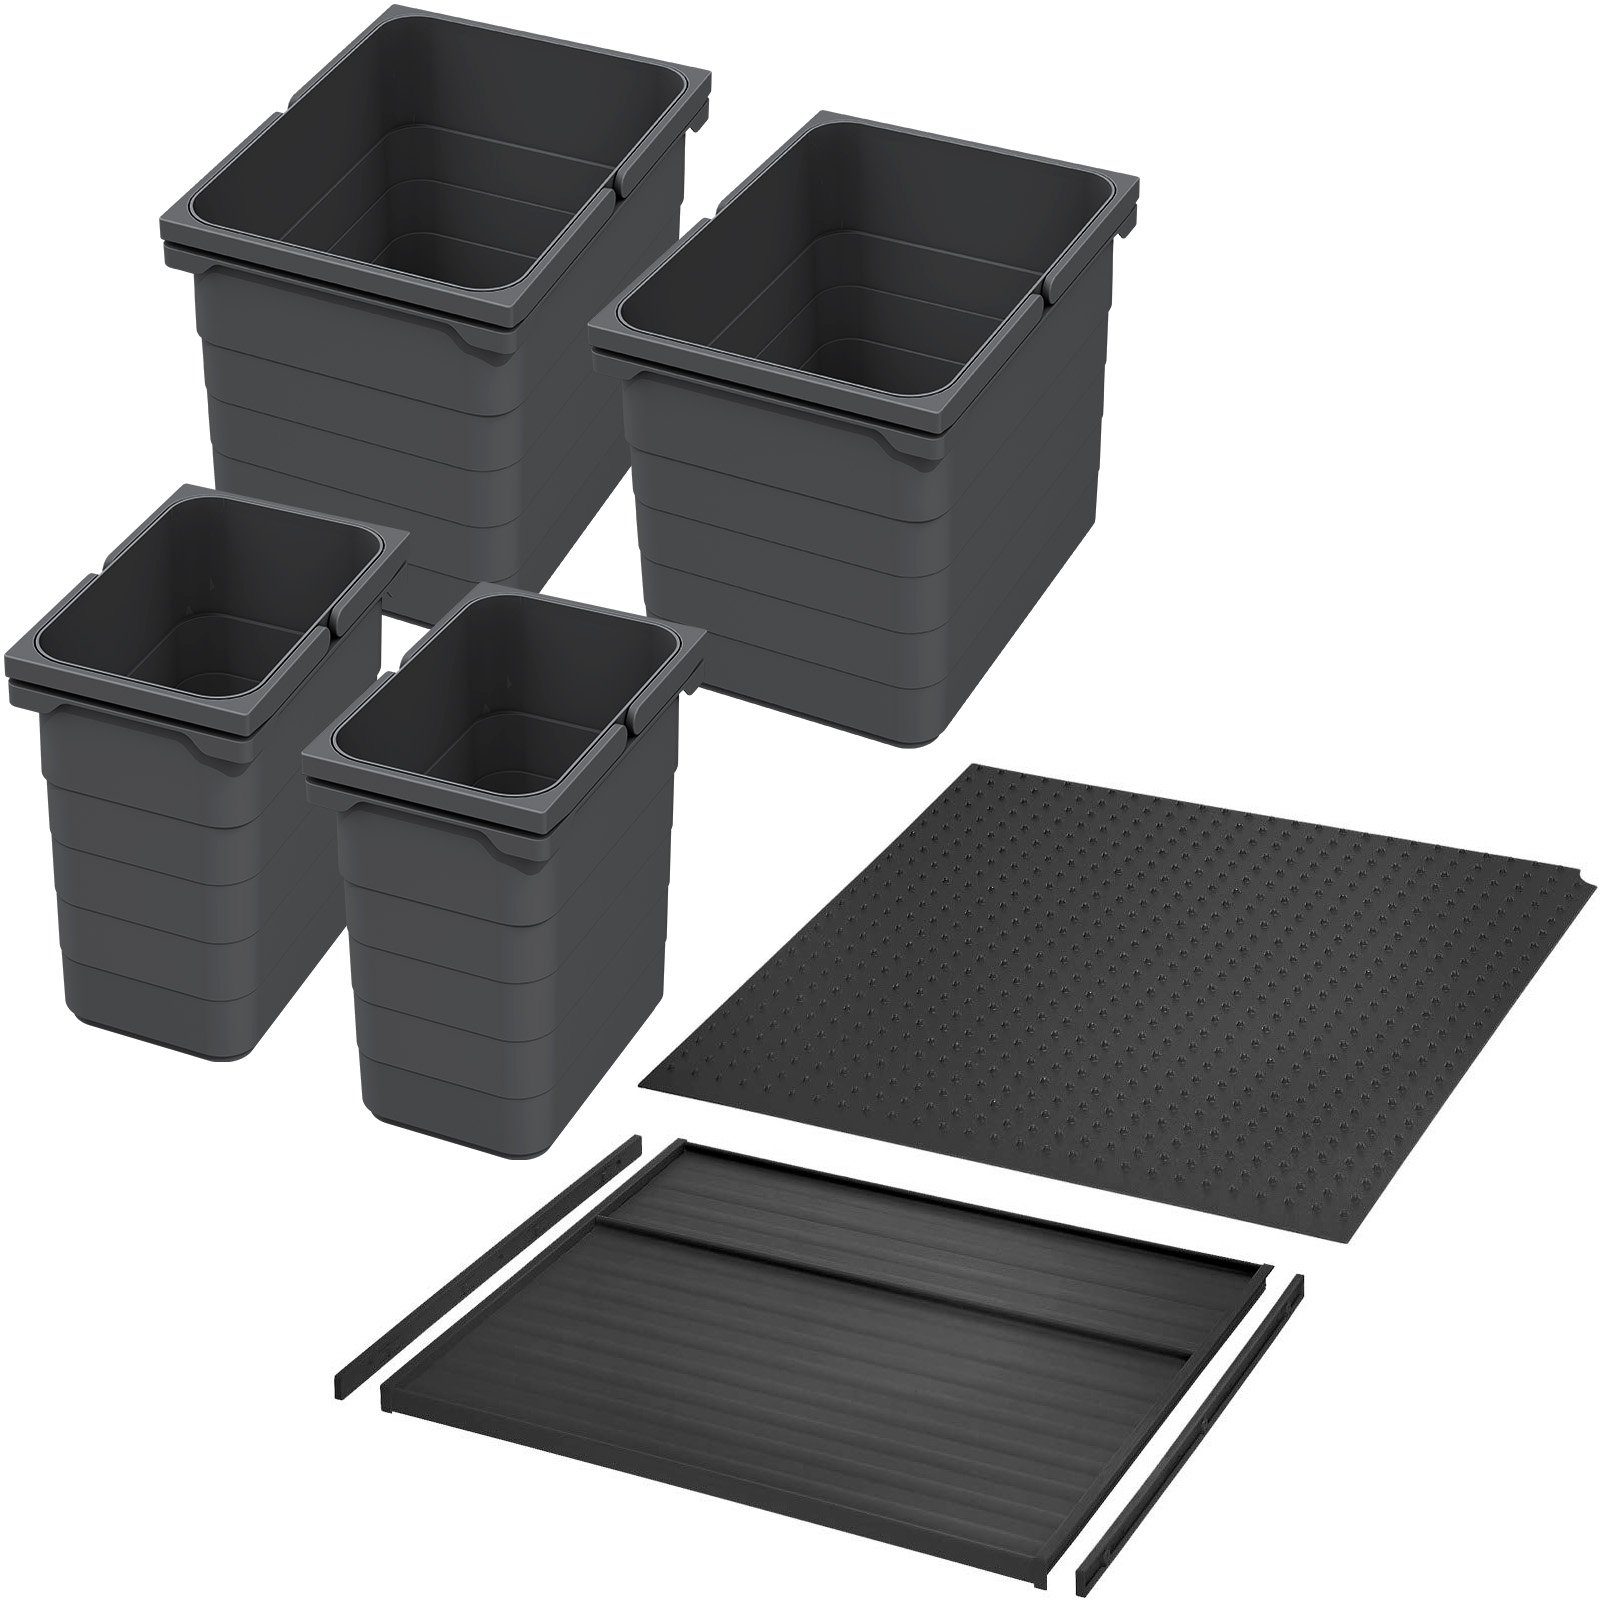 SO-TECH® Mülltrennsystem eins2vier KB 600 mm, Seitenstärke 16 mm Höhe 250 mm, 2x 7L, 2x 15L, 1x 60er Bodenplatte, 1x 60er Deckelplatte für Tandembox | Mülltrennsysteme